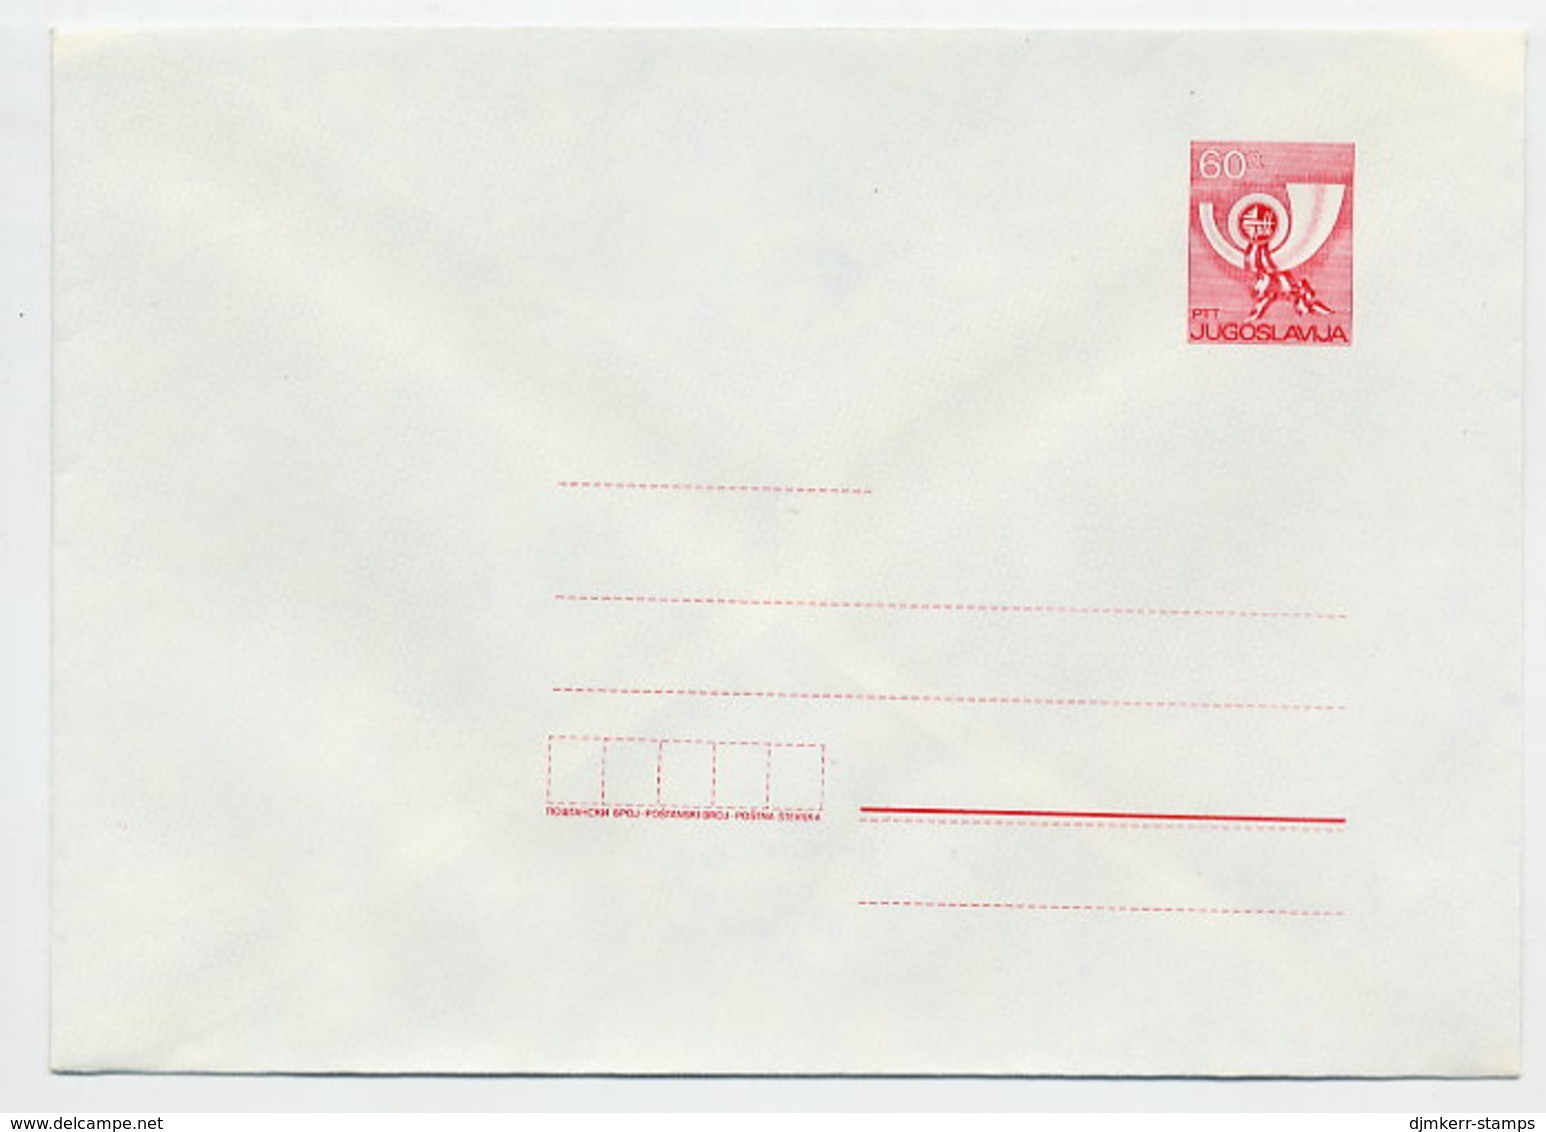 YUGOSLAVIA 1987 Posthorn 60 D. Envelope, Unused. Michel U77 - Postal Stationery